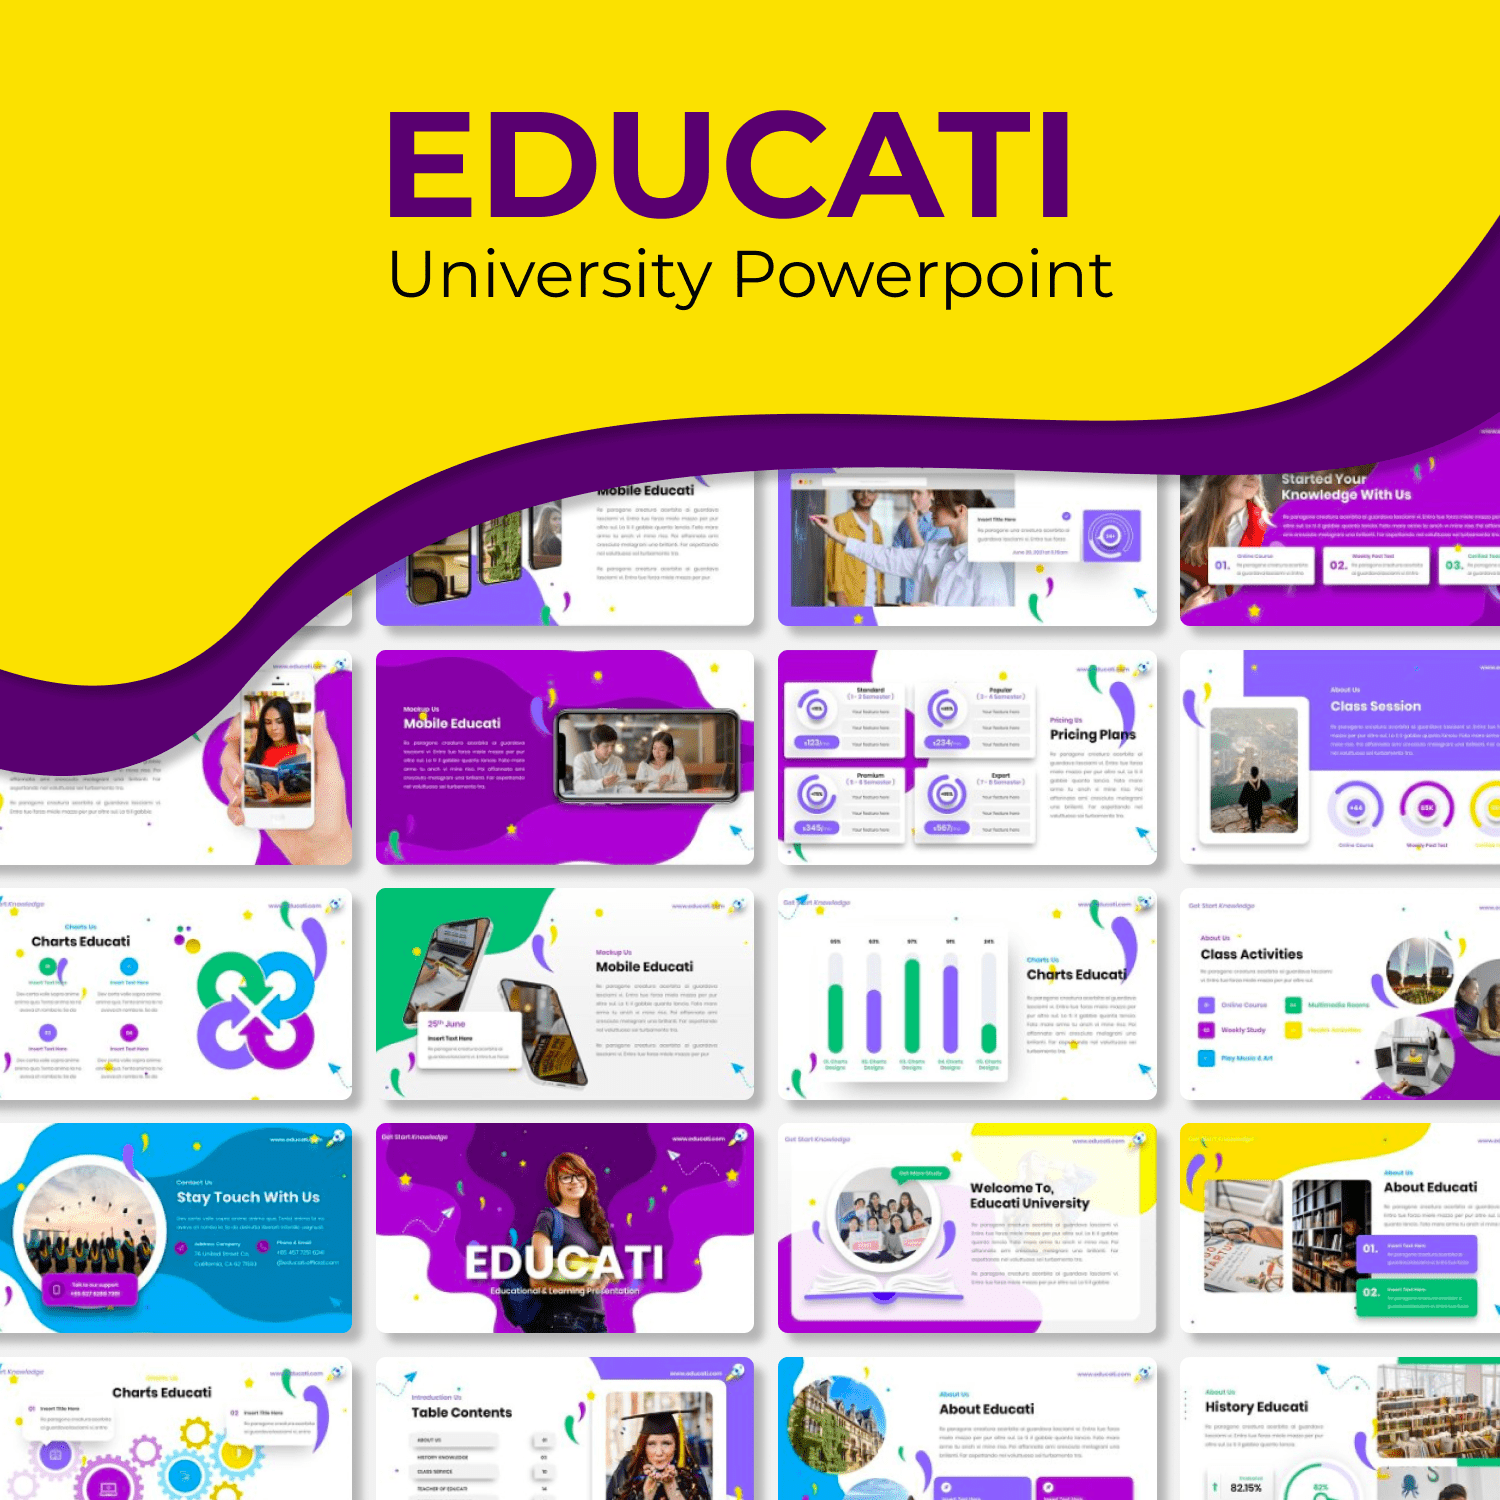 Educati - University Powerpoint by MasterBundles.